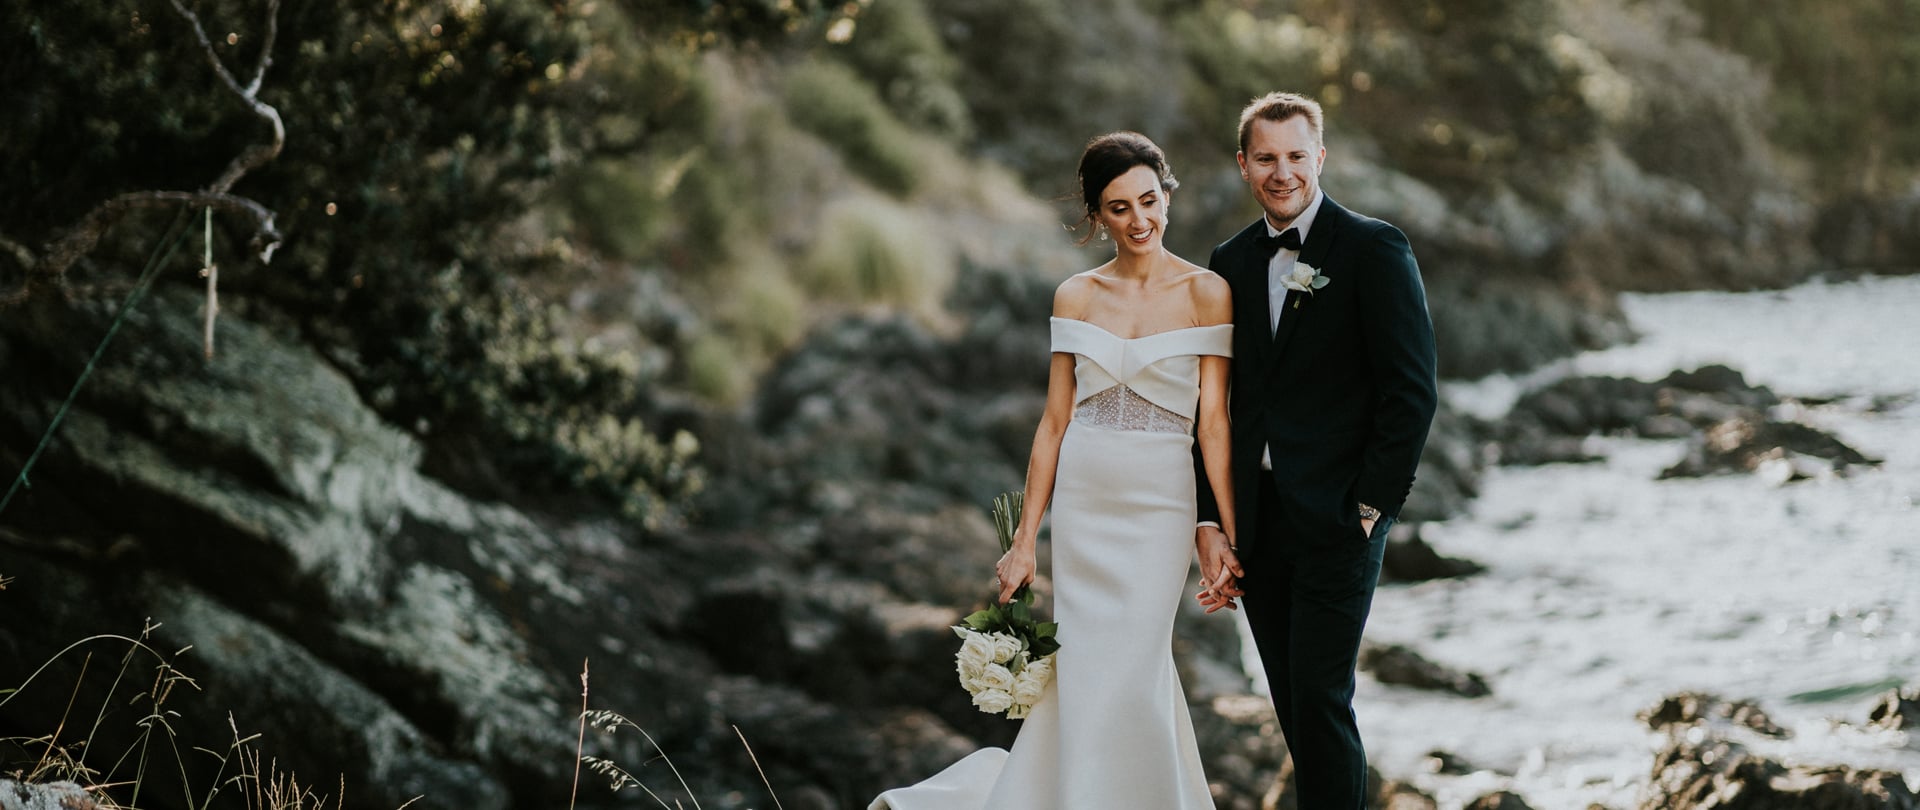 Joanna & Egon Wedding Video Filmed at Waiheke Island, New Zealand